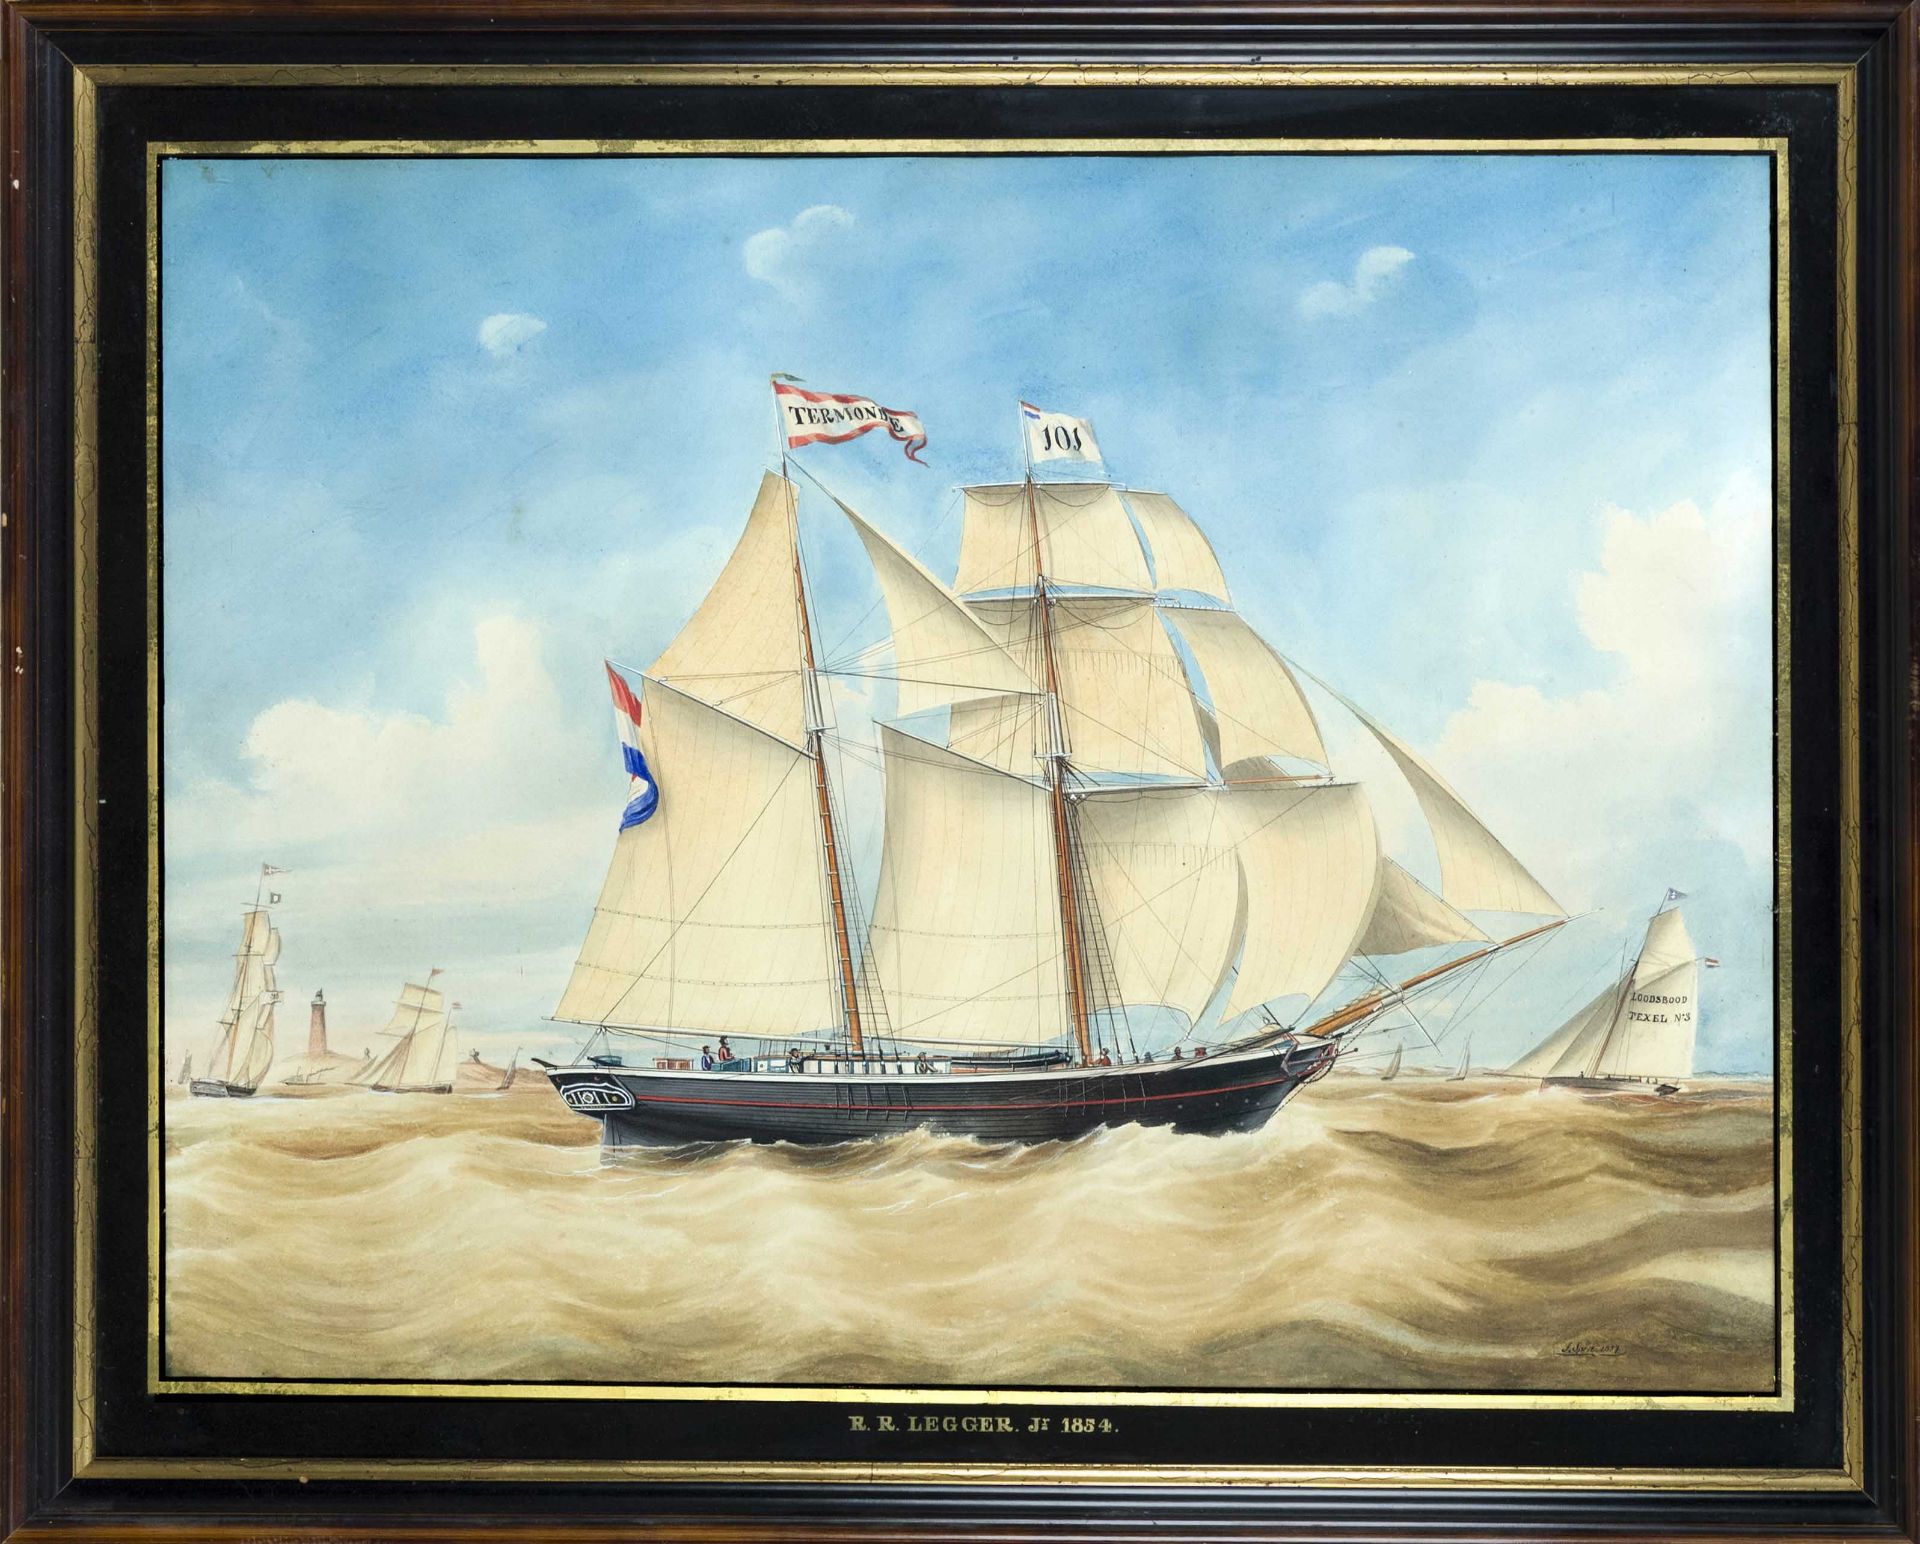 J. Spire, marine painter mid-19th century, Captain's picture of the R.R. Legger under Dutch flag,